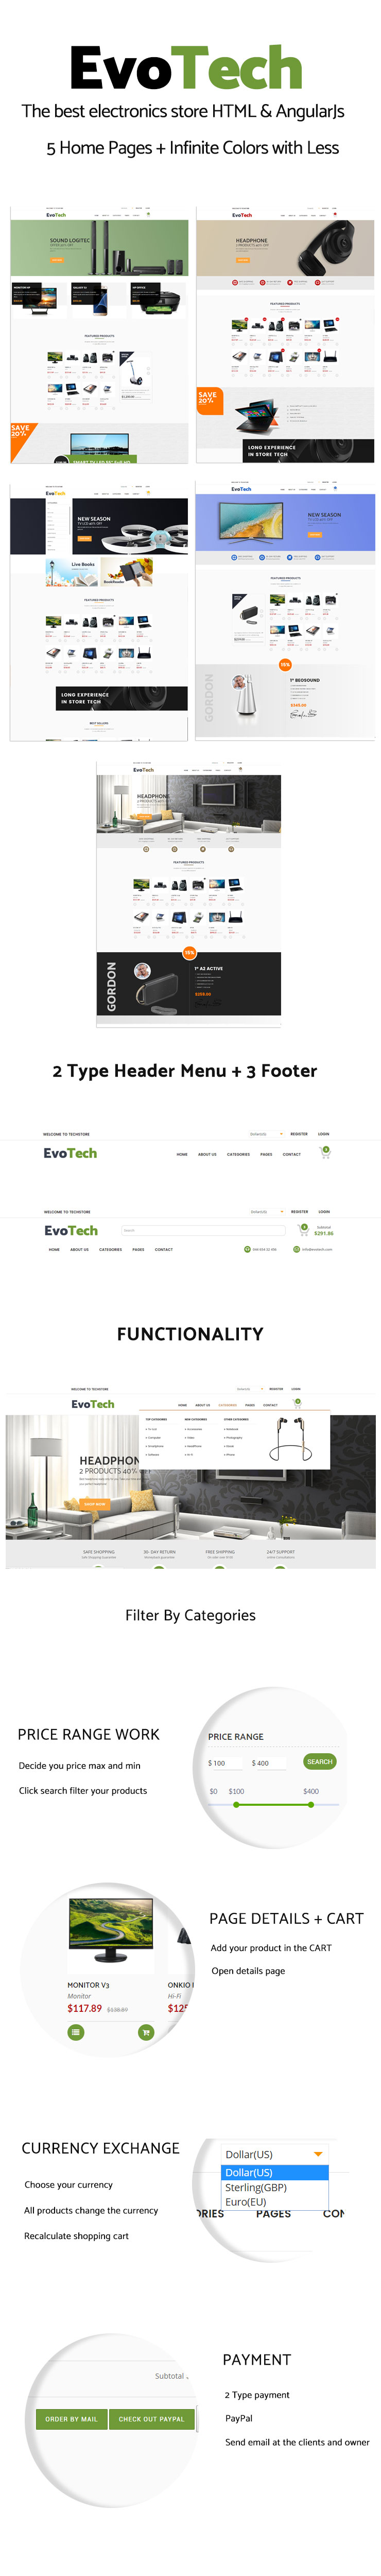 EvoTech - Electronics eCommerce HTML Template - 2